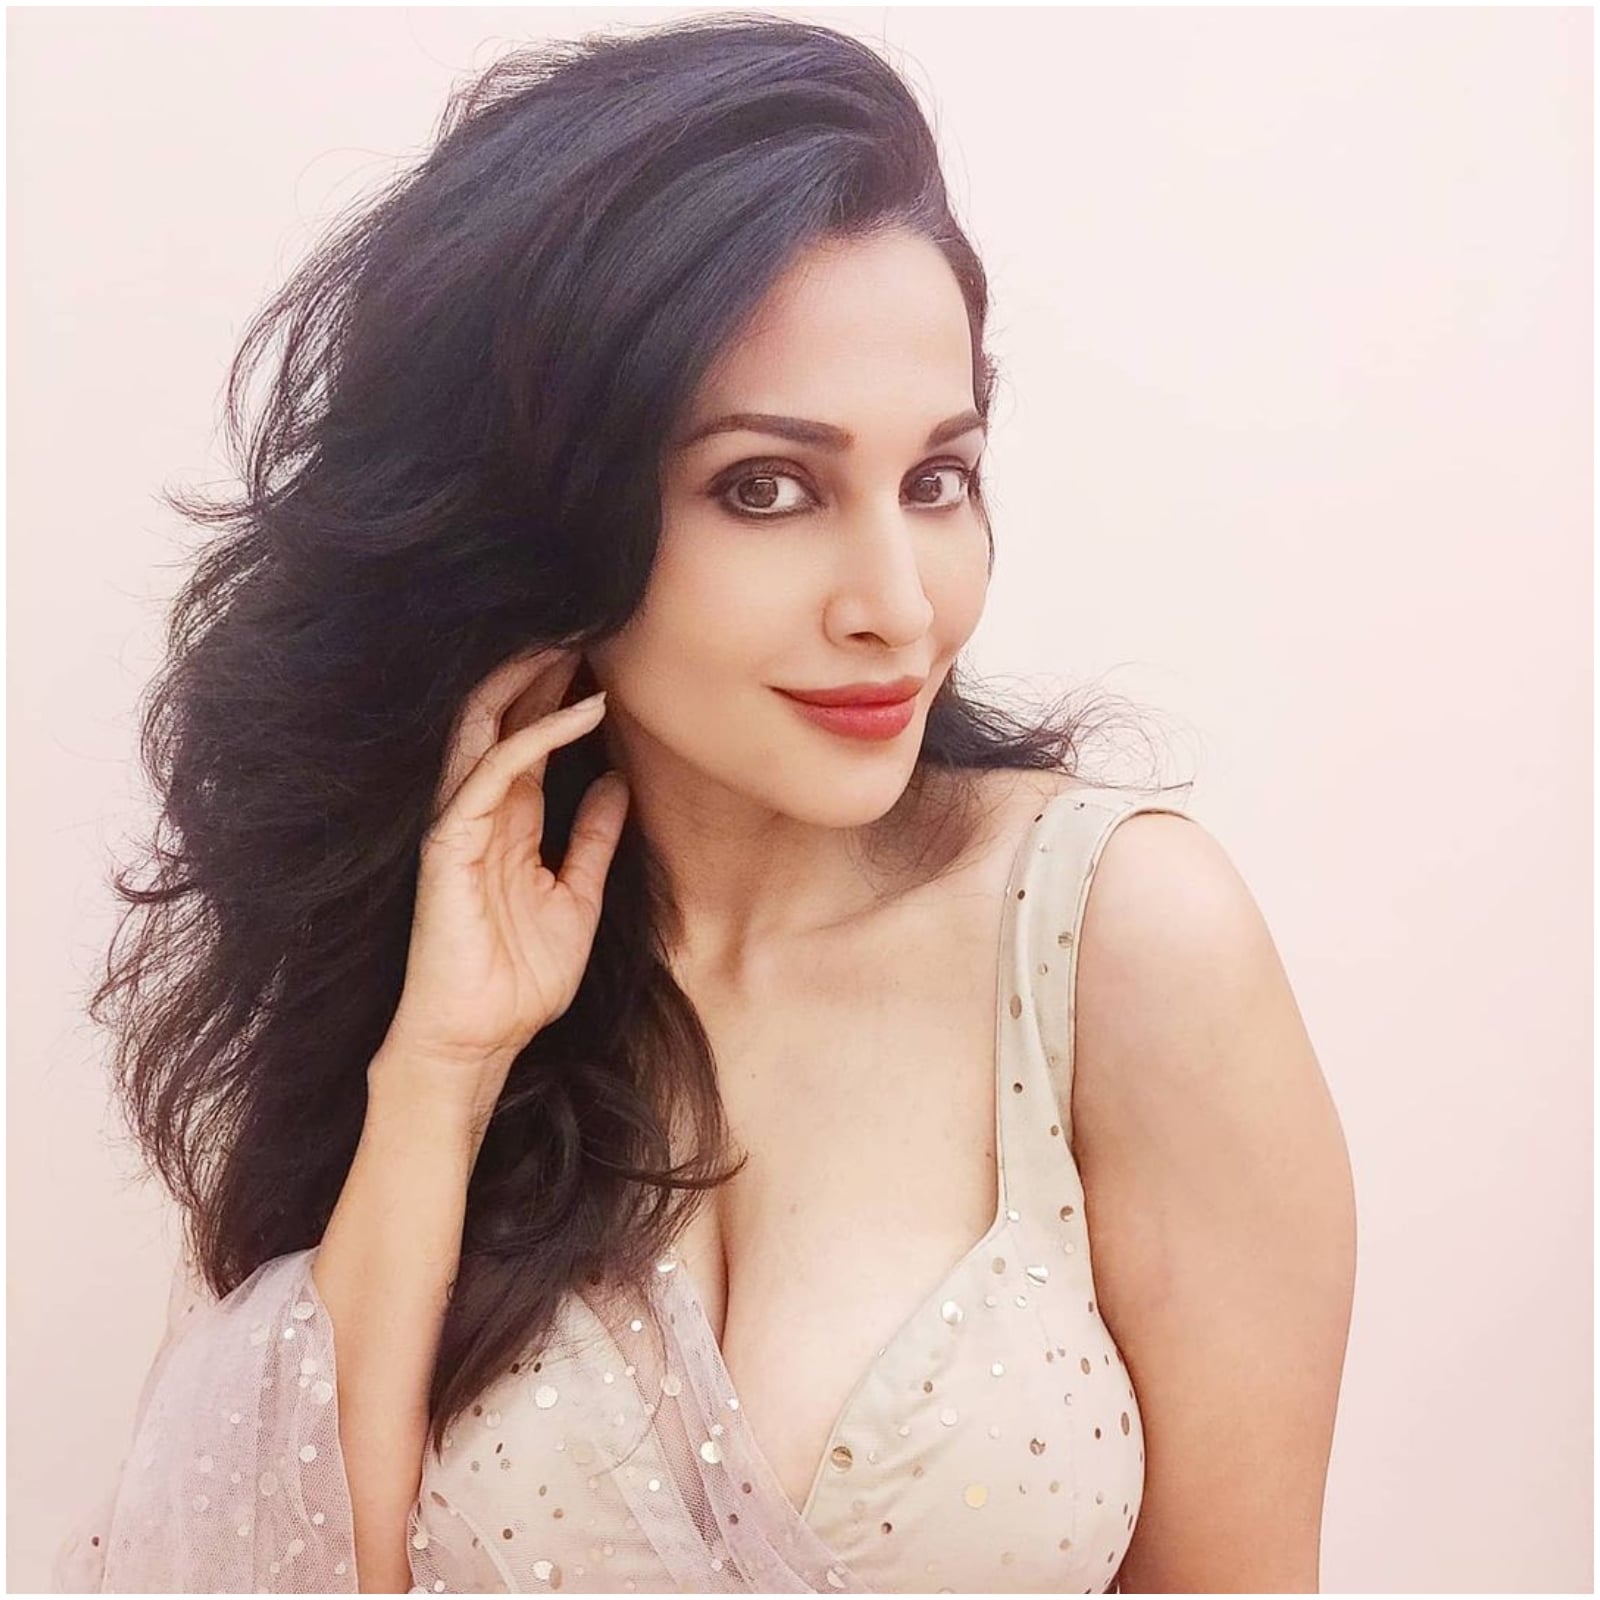 Katrina X Video - Raj Kundra Case: 'Gandii Baat' Actress Flora Saini Said No When Approached  for Content on HotShots App - News18